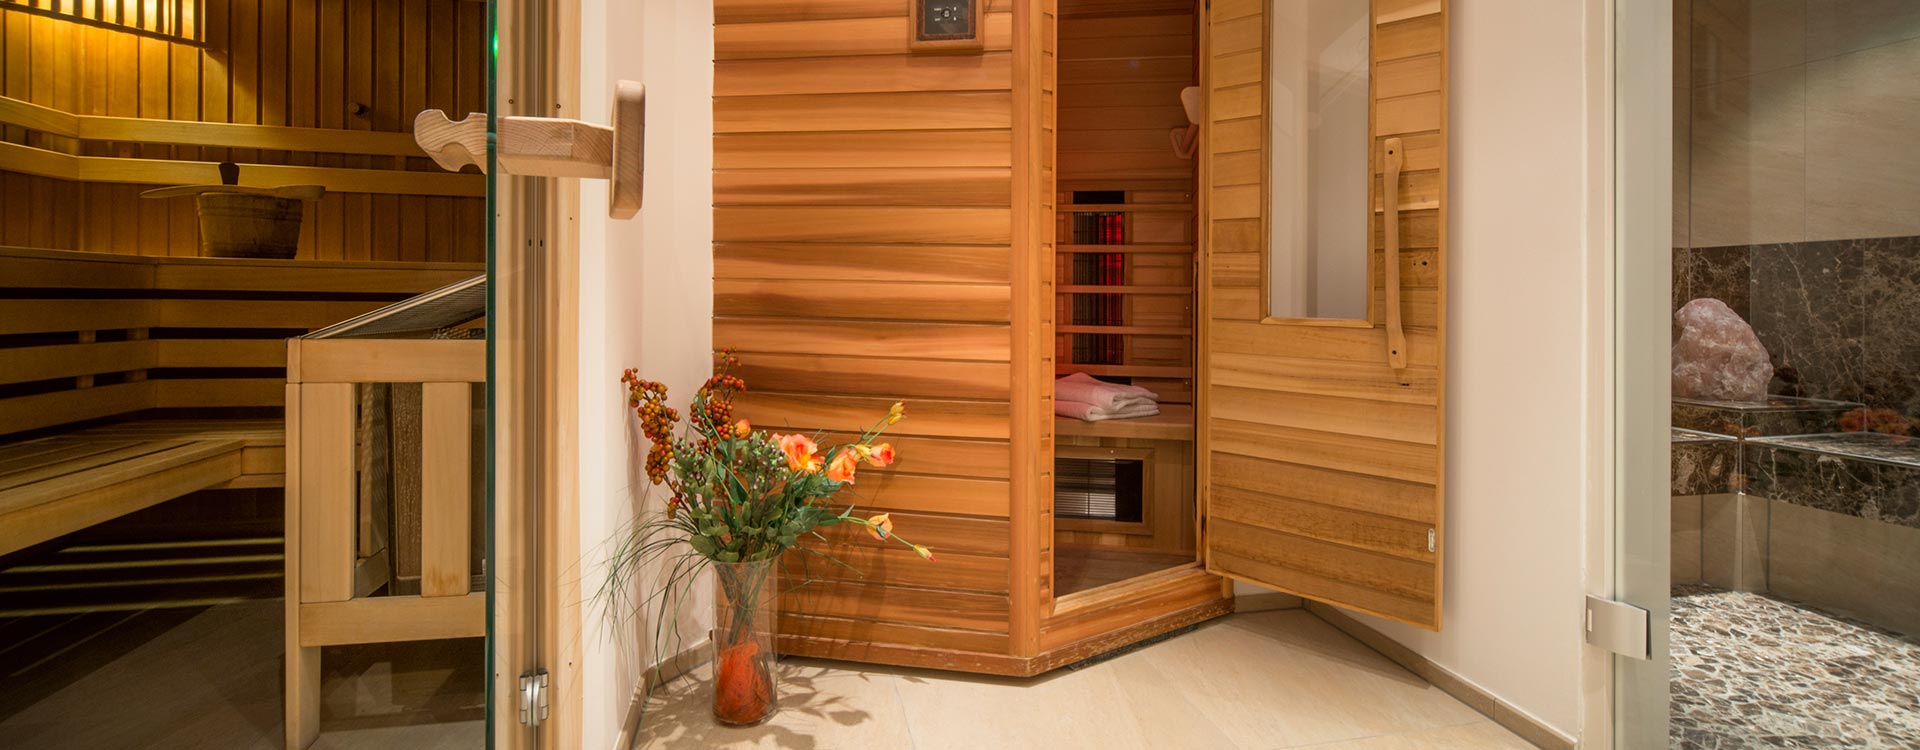 Finnish sauna - Infrared sauna - steam Sauna